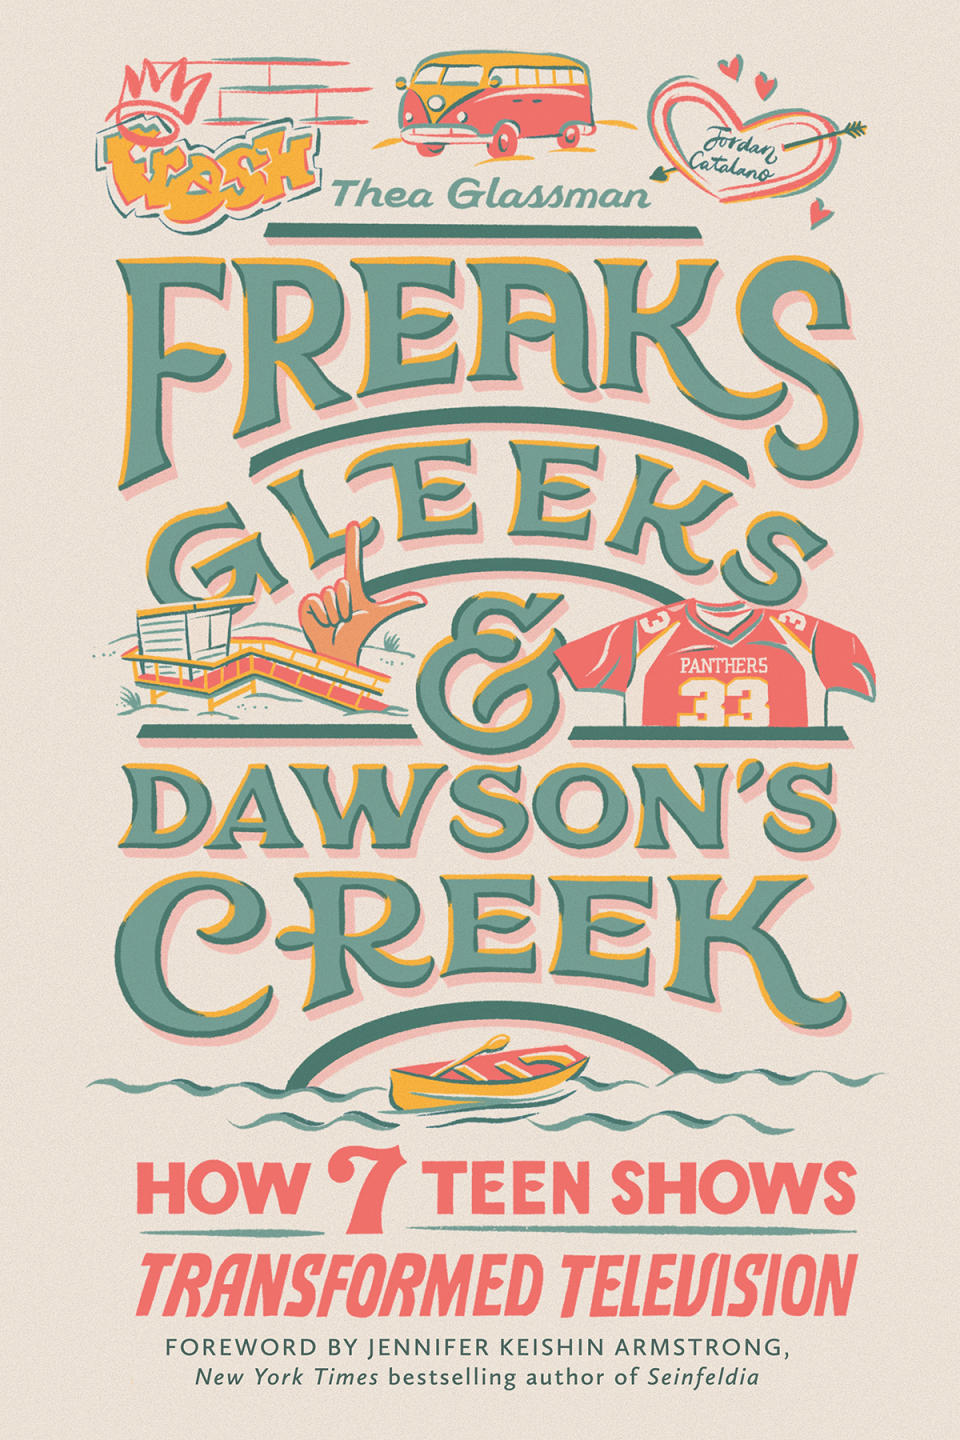 New book 'Freaks, Gleeks & Dawson's Creek,' by Thea Glassman.